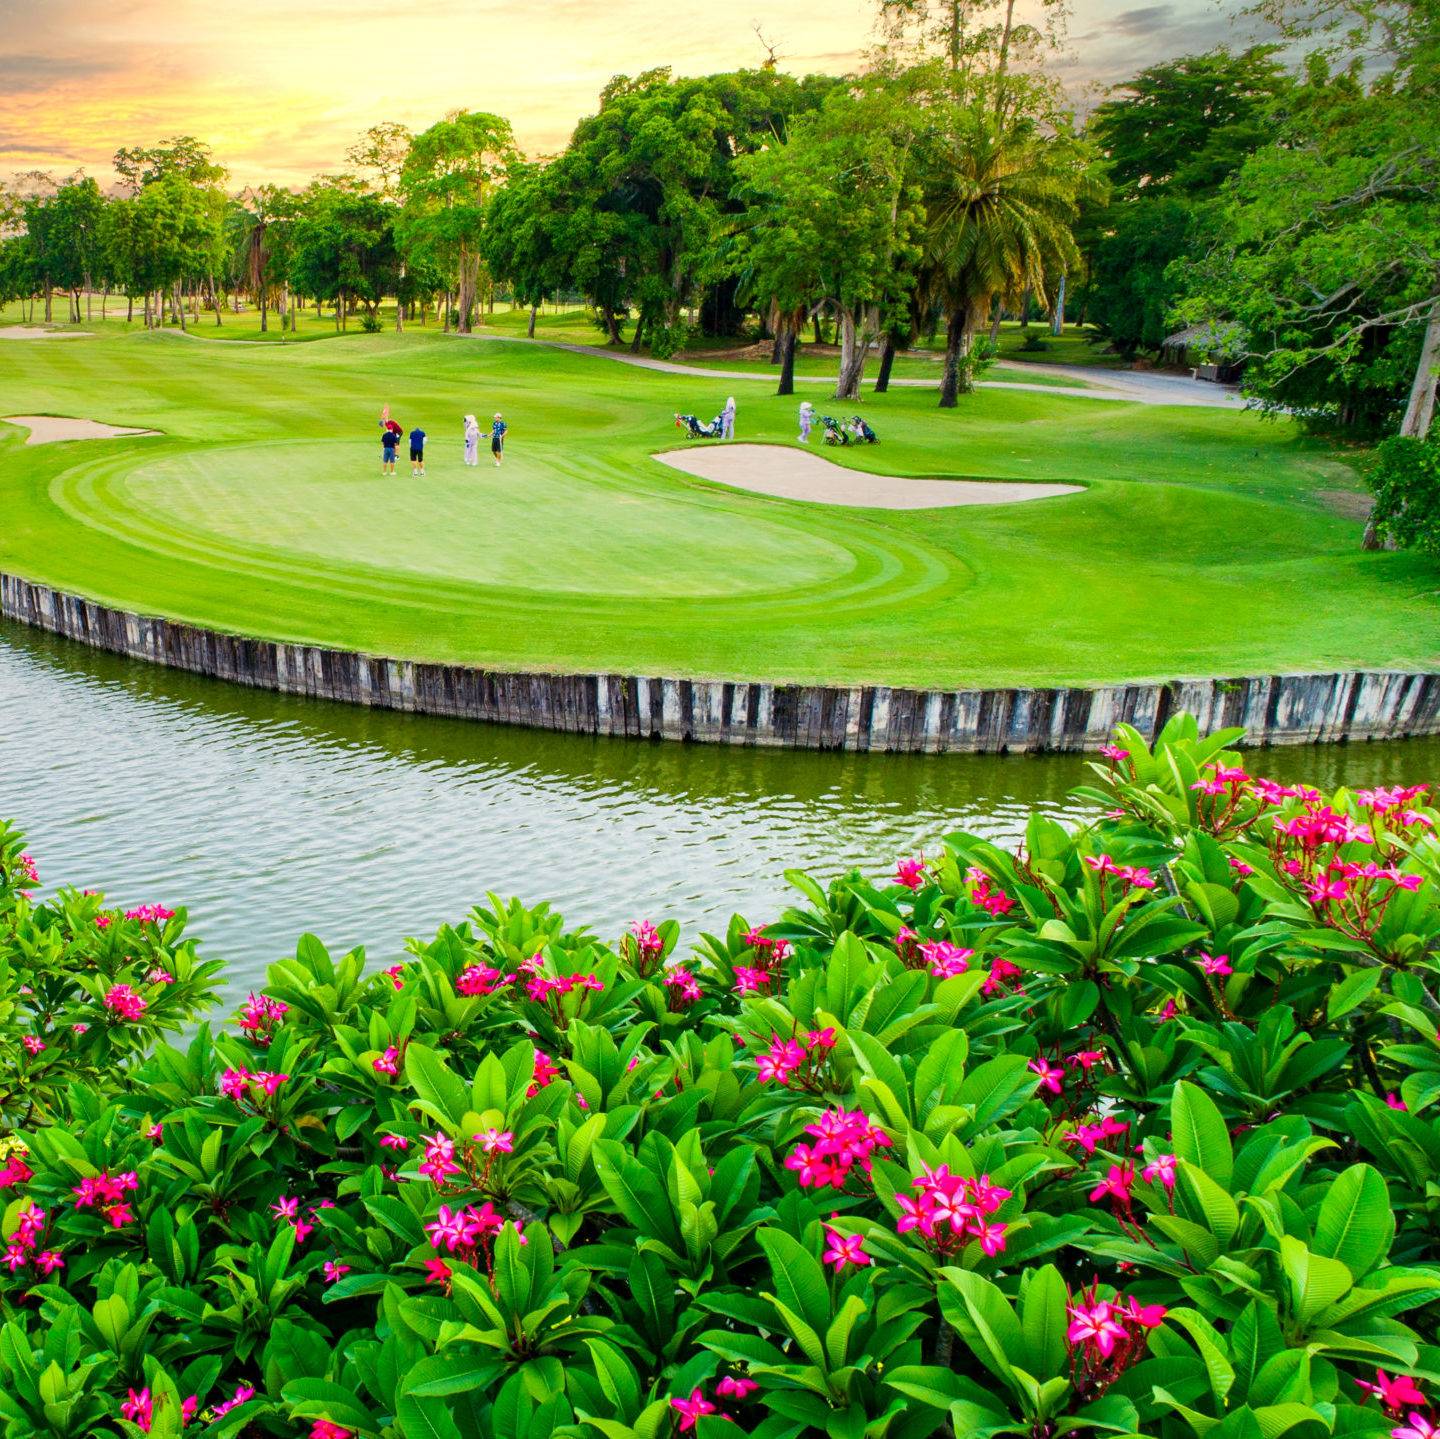 Green, Subhapruek Golf Club, Bangkok, Thailand